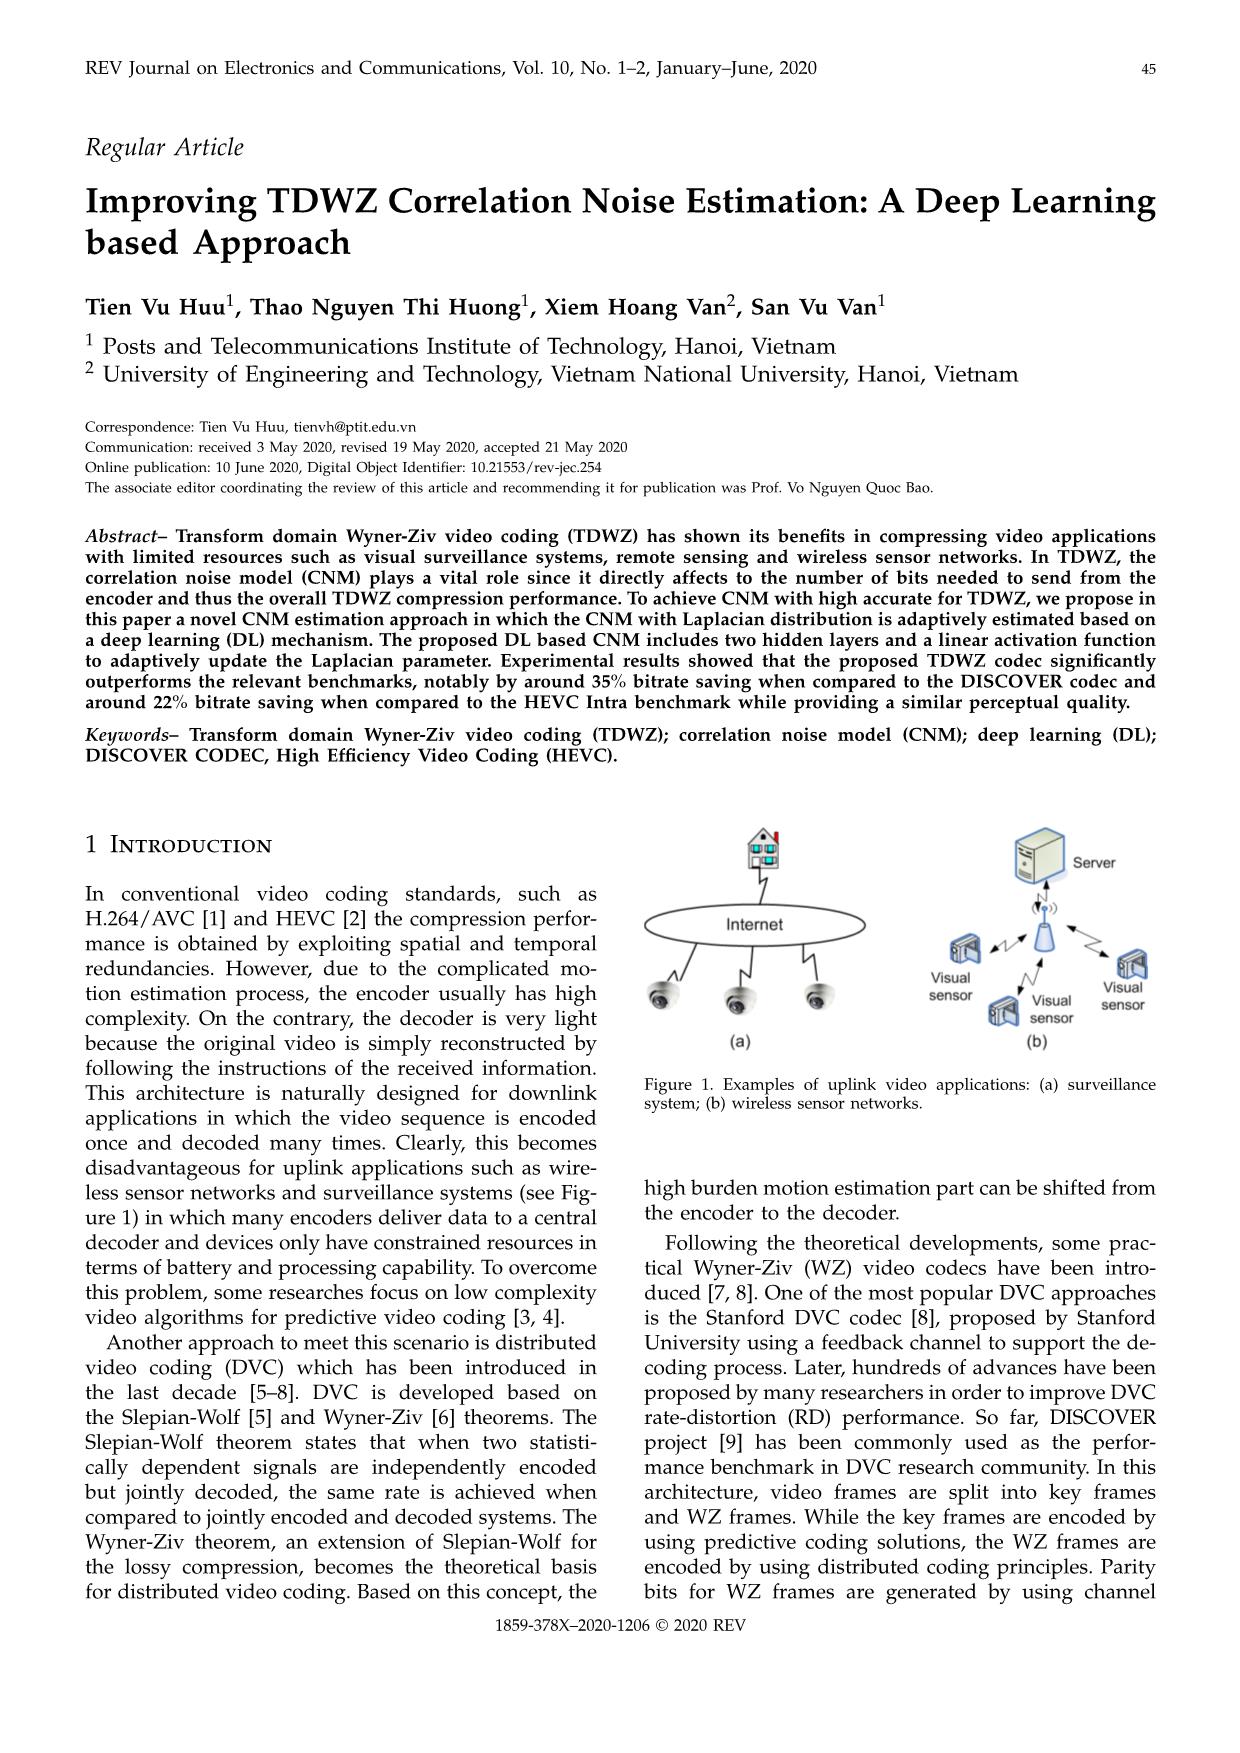 Improving TDWZ correlation noise estimation: A deep learning based approach trang 1